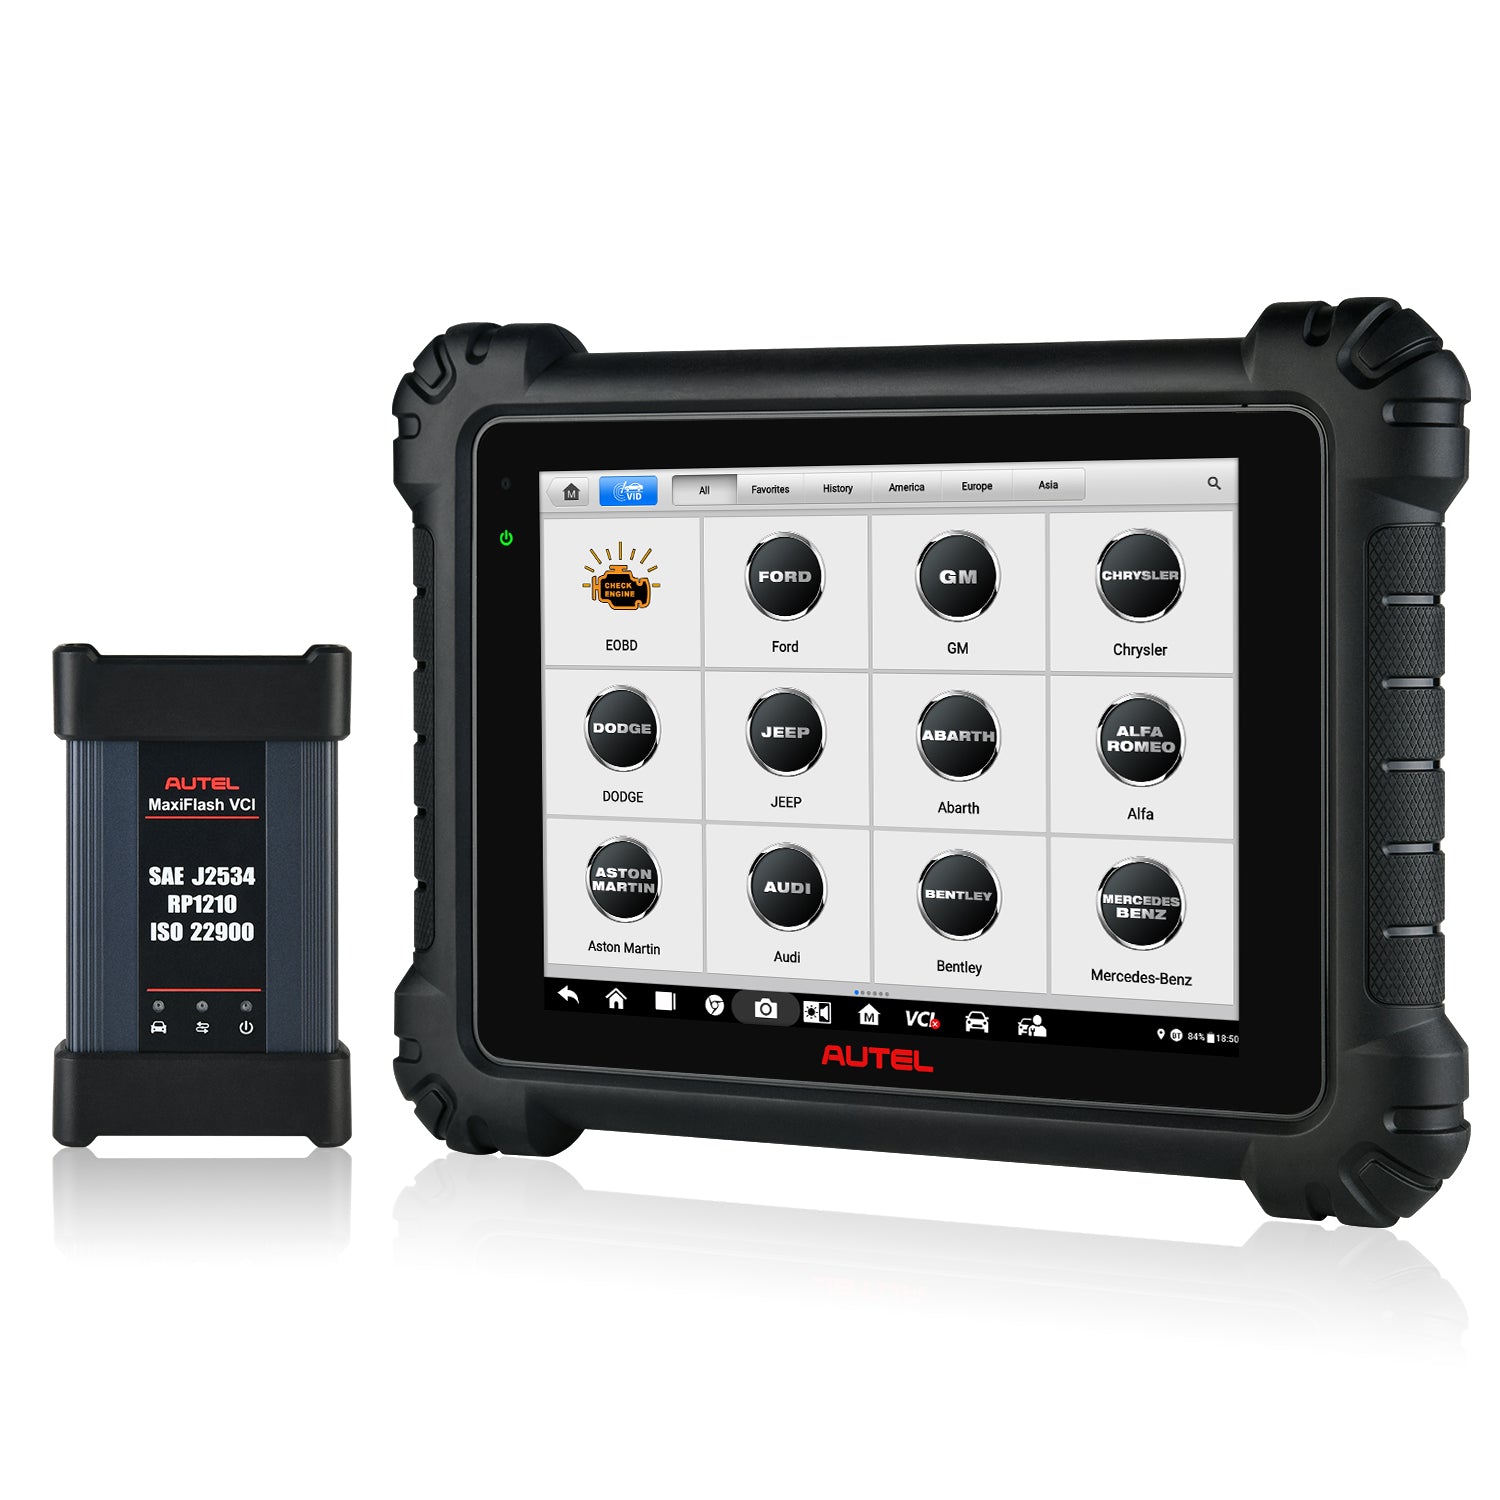 Autel Maxisys MS909 car diagnostic scanner wide coverage